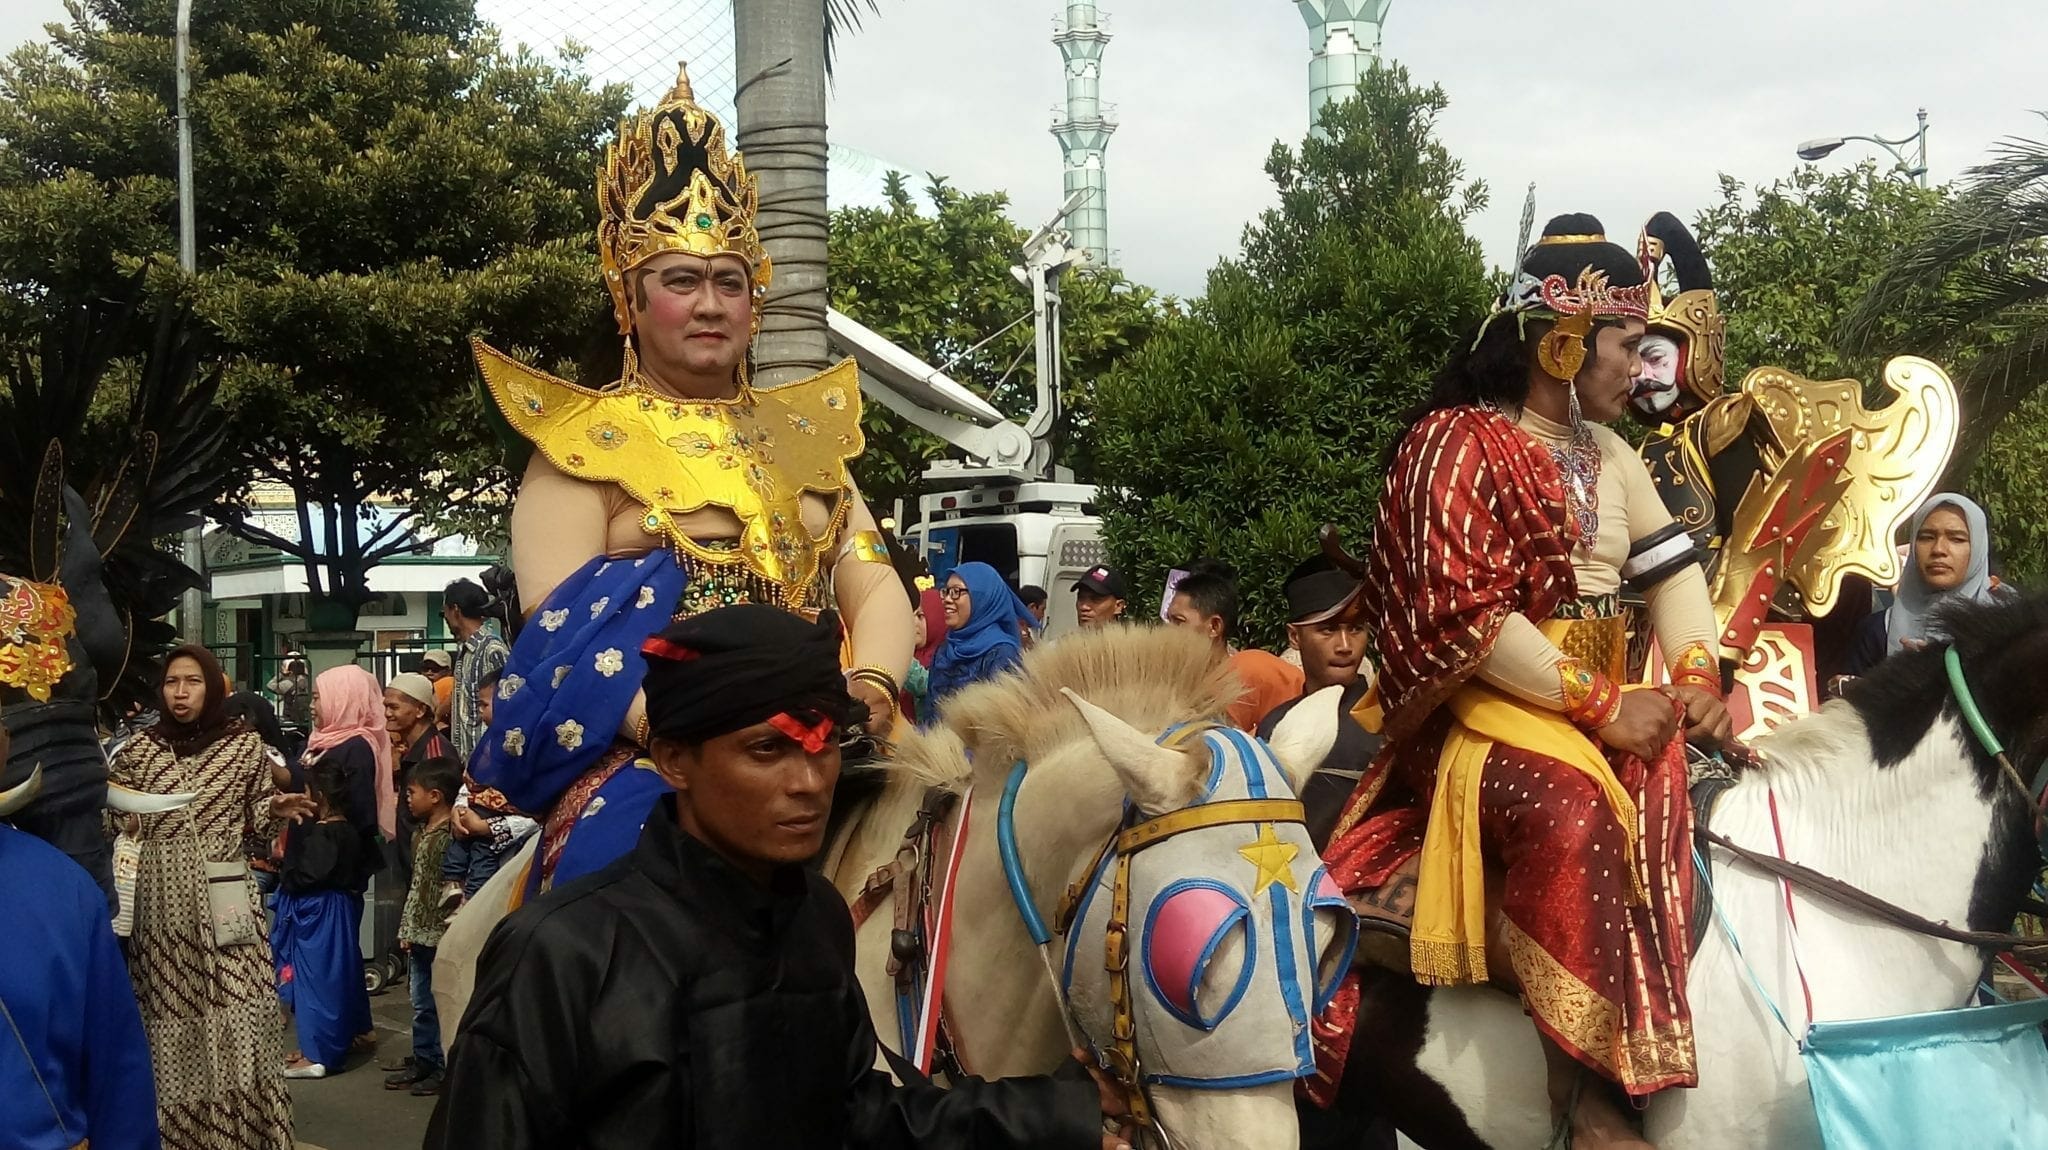 Warna Warni Budaya Indonesia Ramaikan Festival Budaya Kota Tangerang